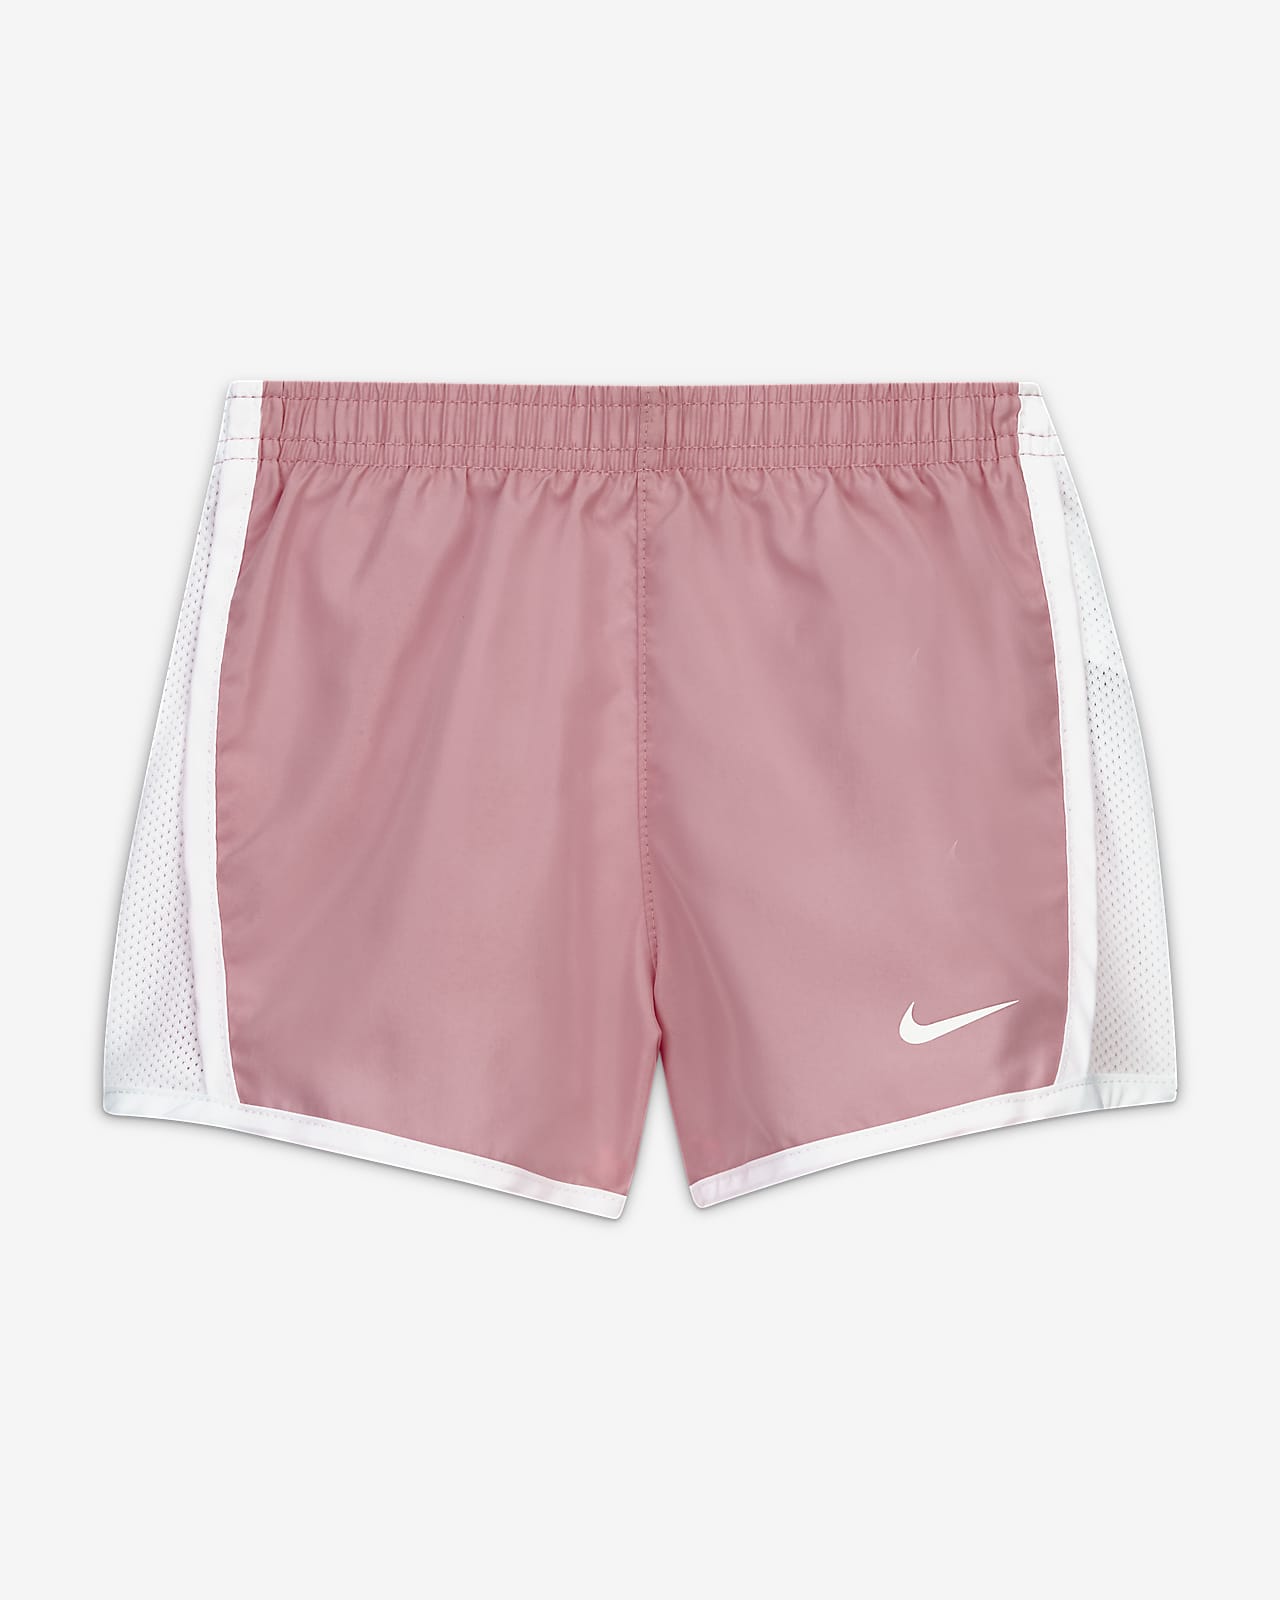 nike dri fit pink shorts